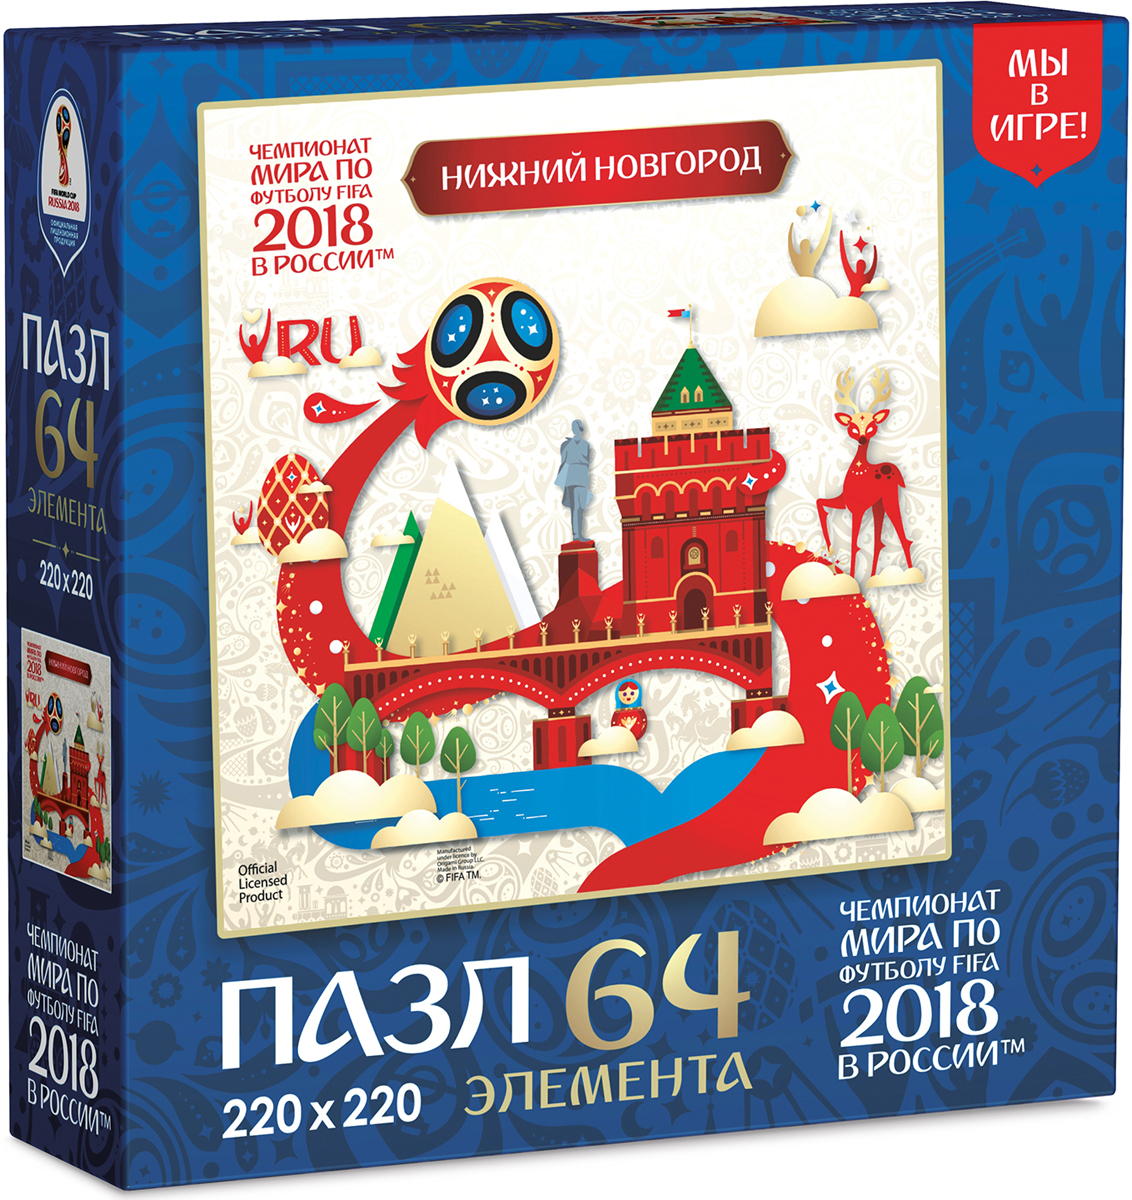 FIFA World Cup Russia 2018 Пазл Look Нижний Новгород 03878